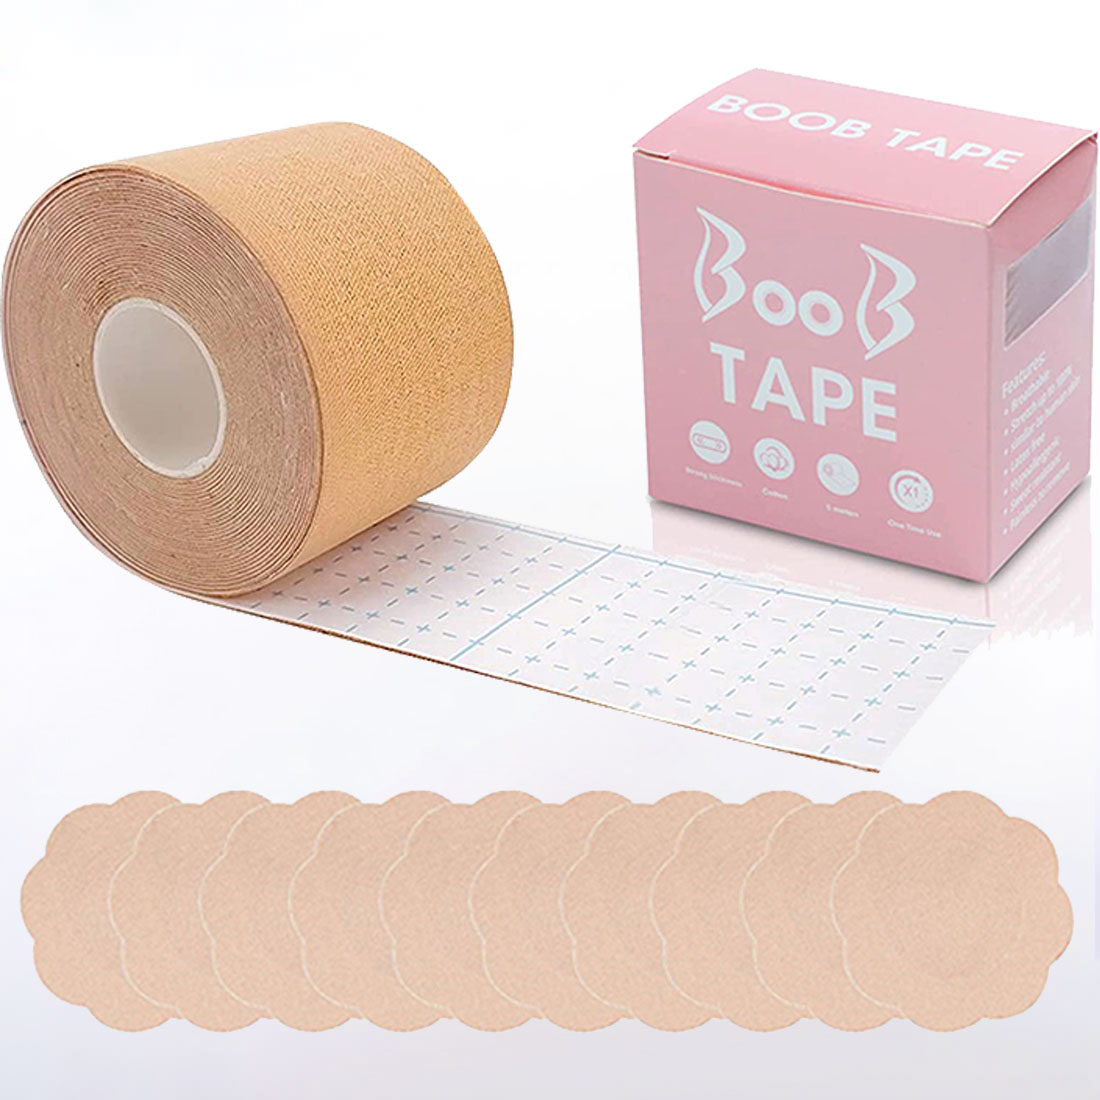 Boob Tape Wholesale Manufacturer